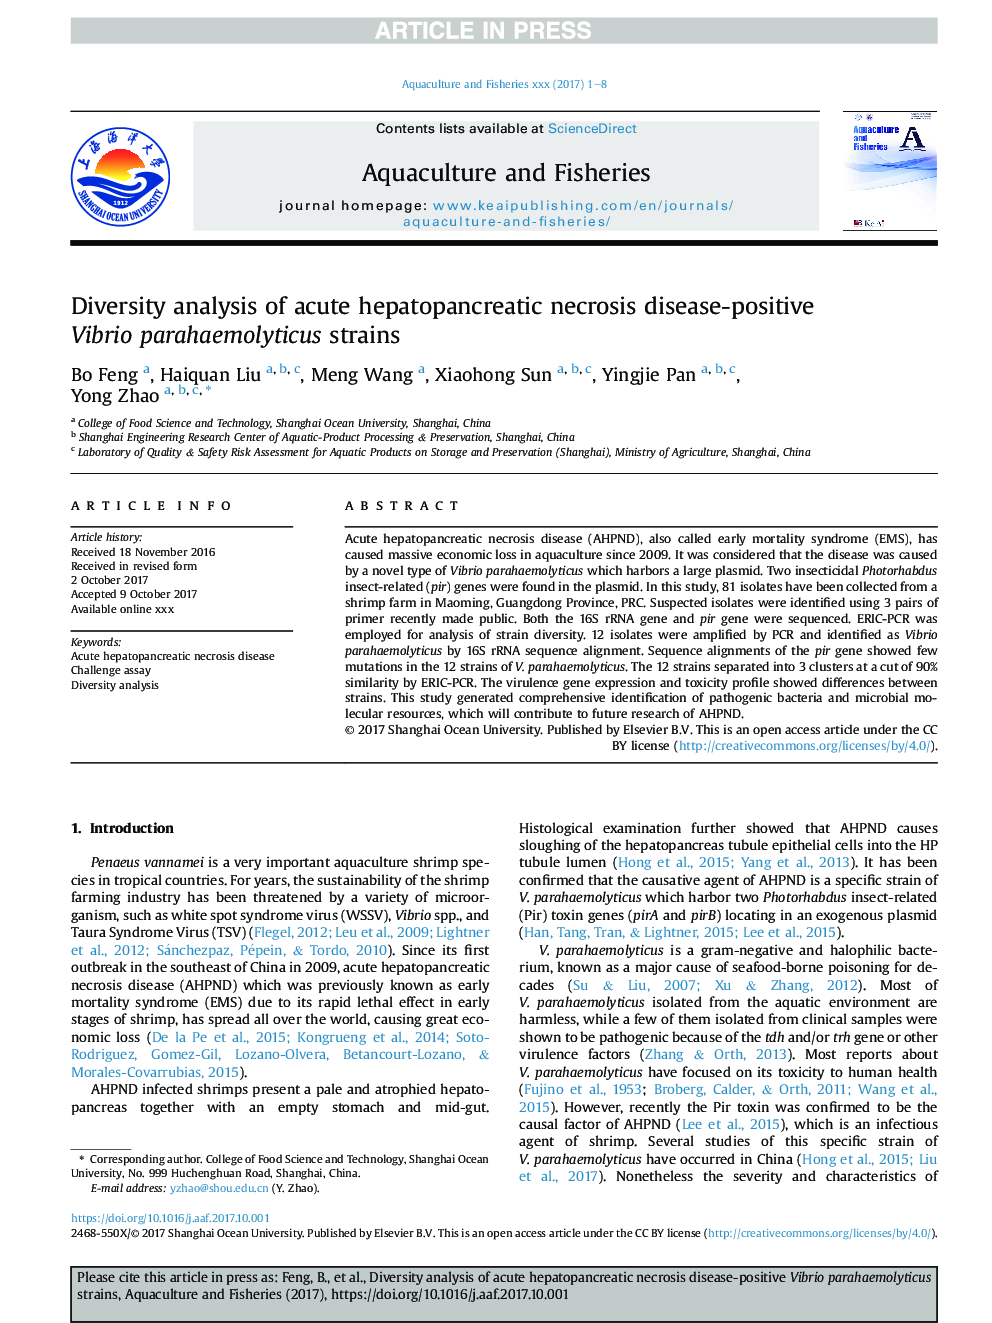 Diversity analysis of acute hepatopancreatic necrosis disease-positive Vibrio parahaemolyticus strains